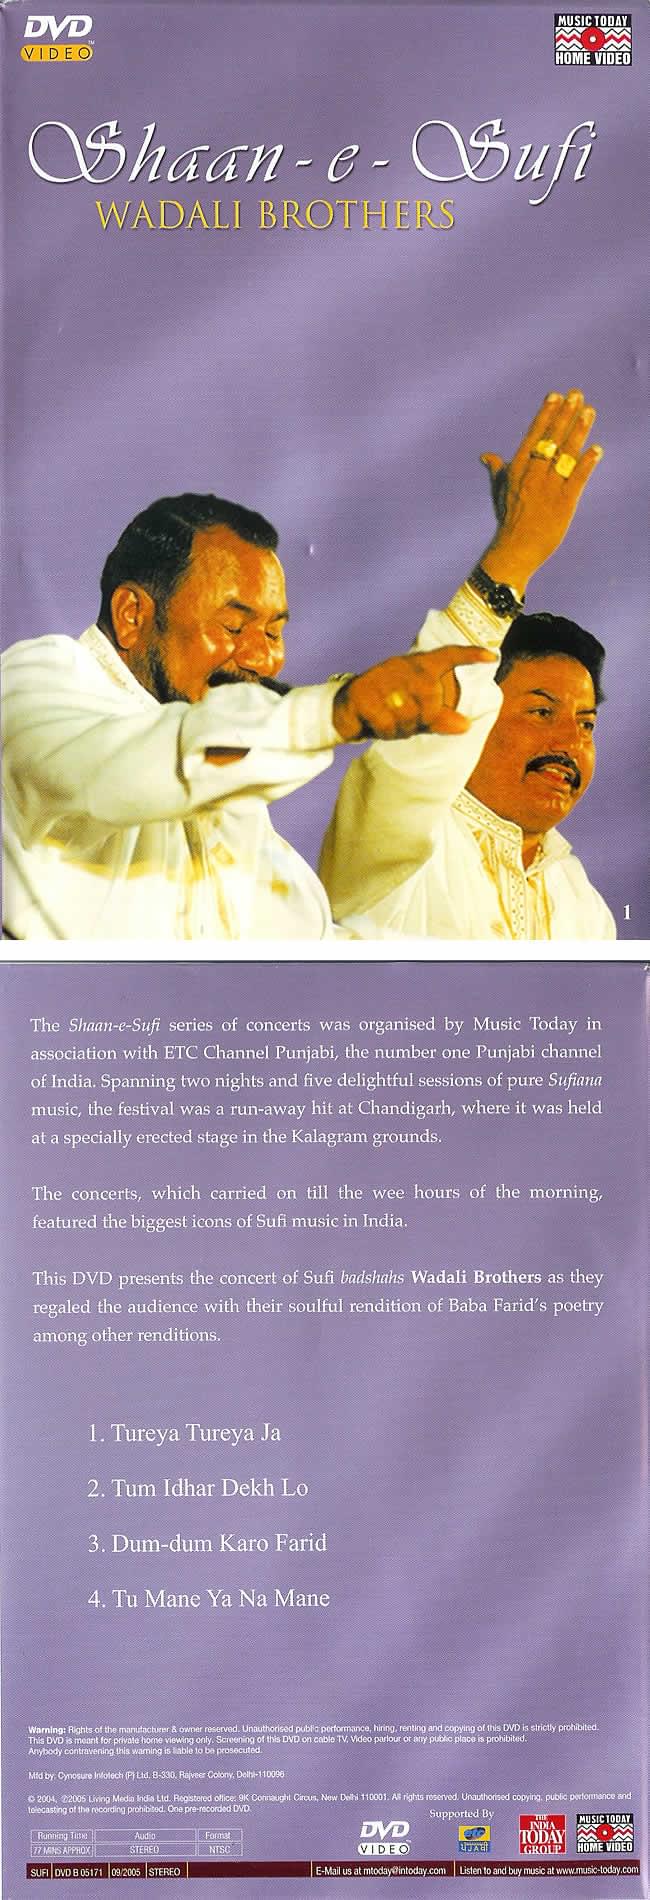 SHAAN-E-SUFI - Wadali Brothersの写真1枚目です。インド古典音楽,2006 インド映画